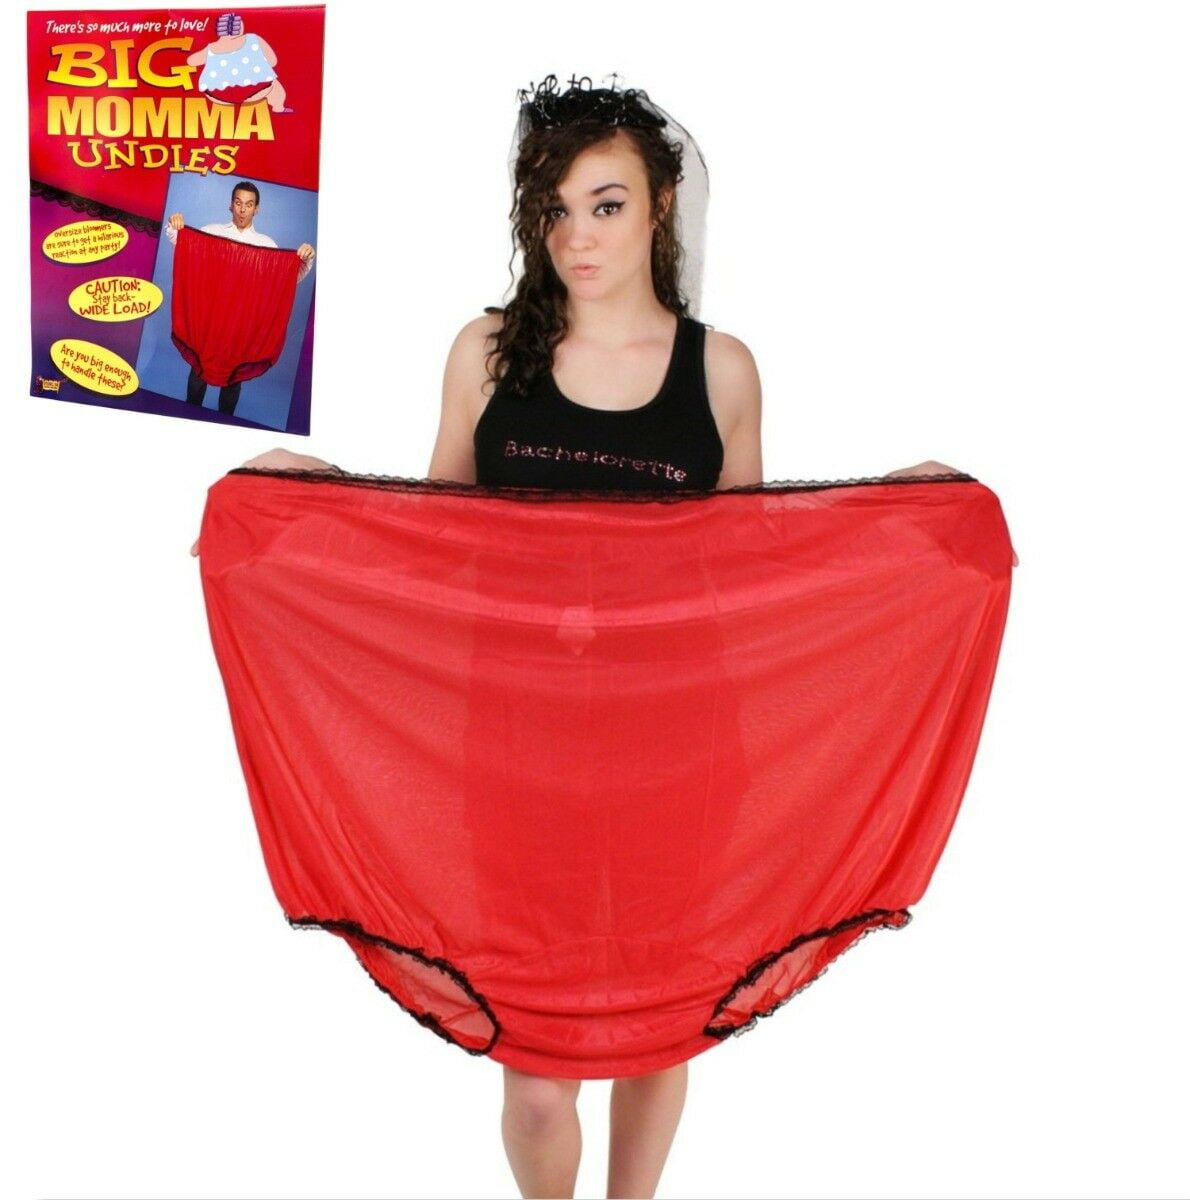 adviicd Panties for Women Naughty Play Teen Girls Underwear